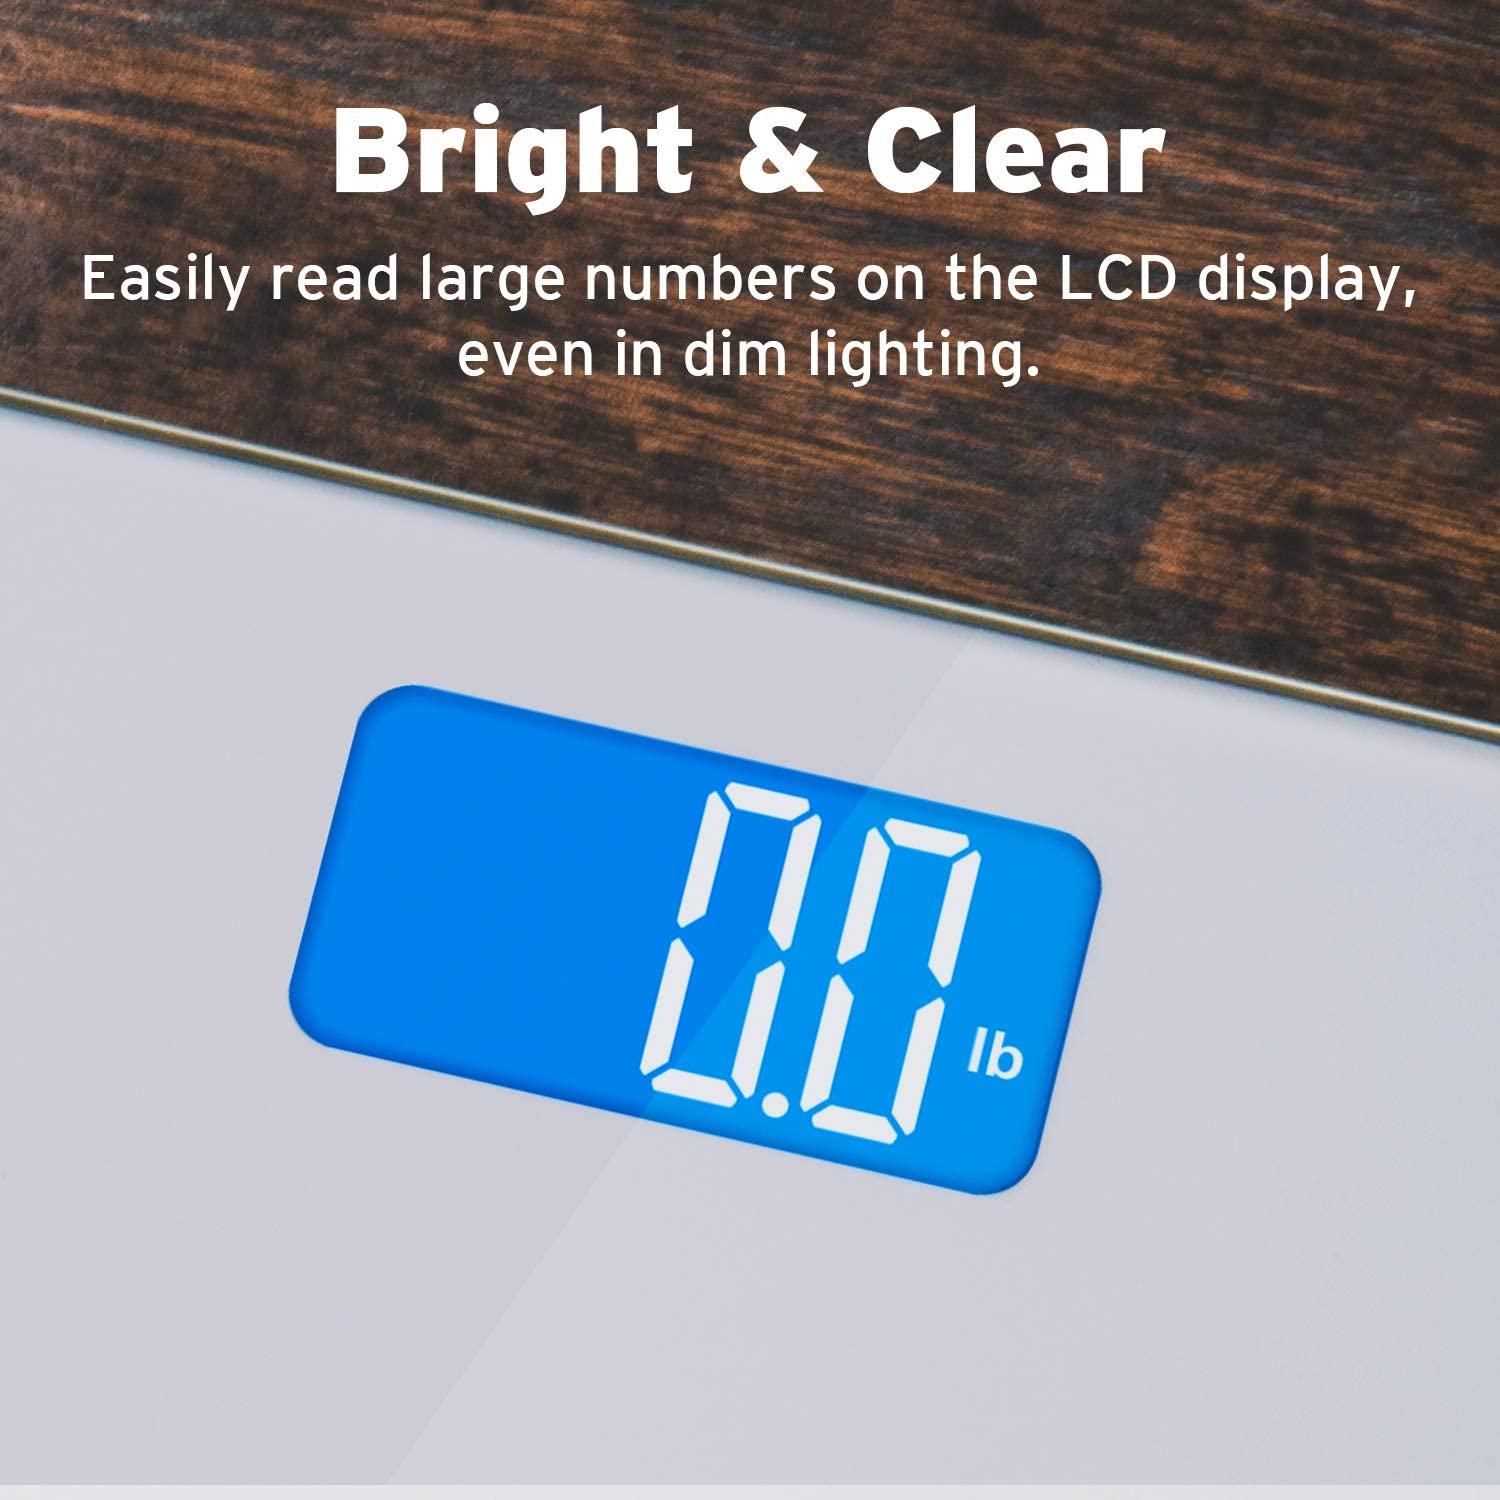 Etekcity Digital Body Weight Bathroom Scale, Large Blue LCD